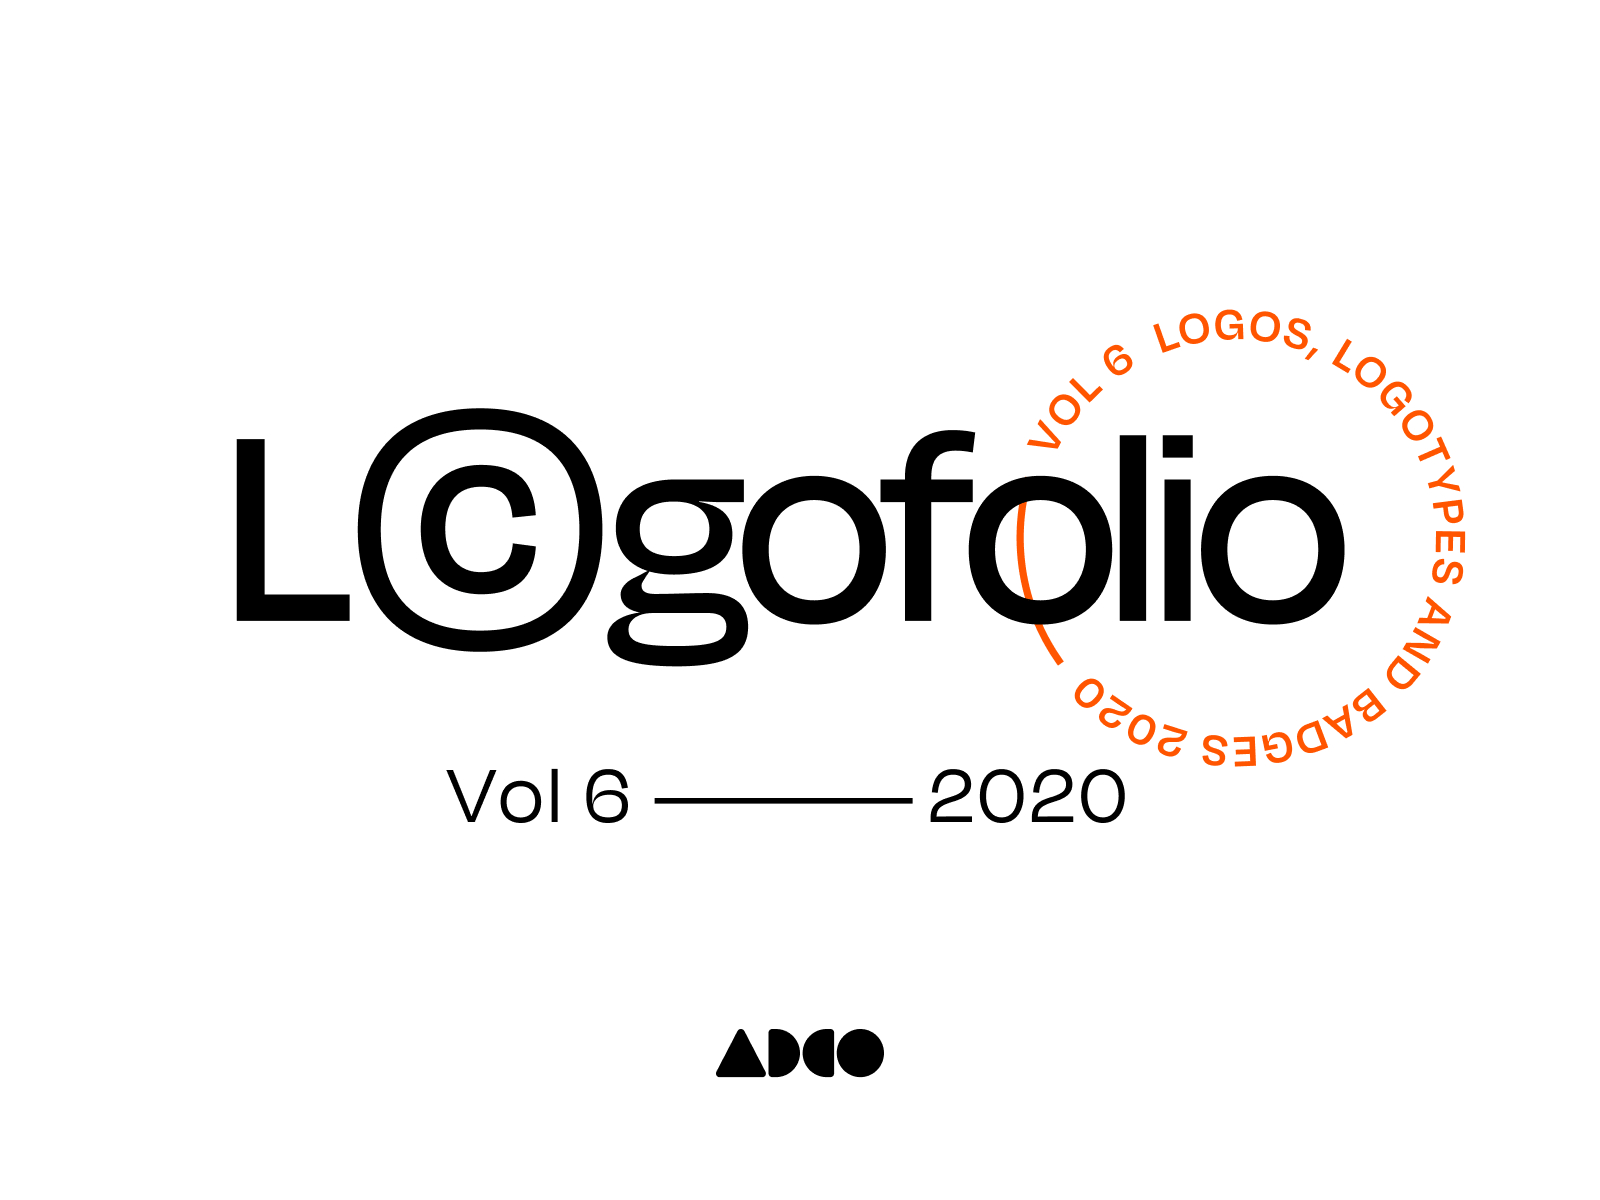 Behance logofolio – Vol 6